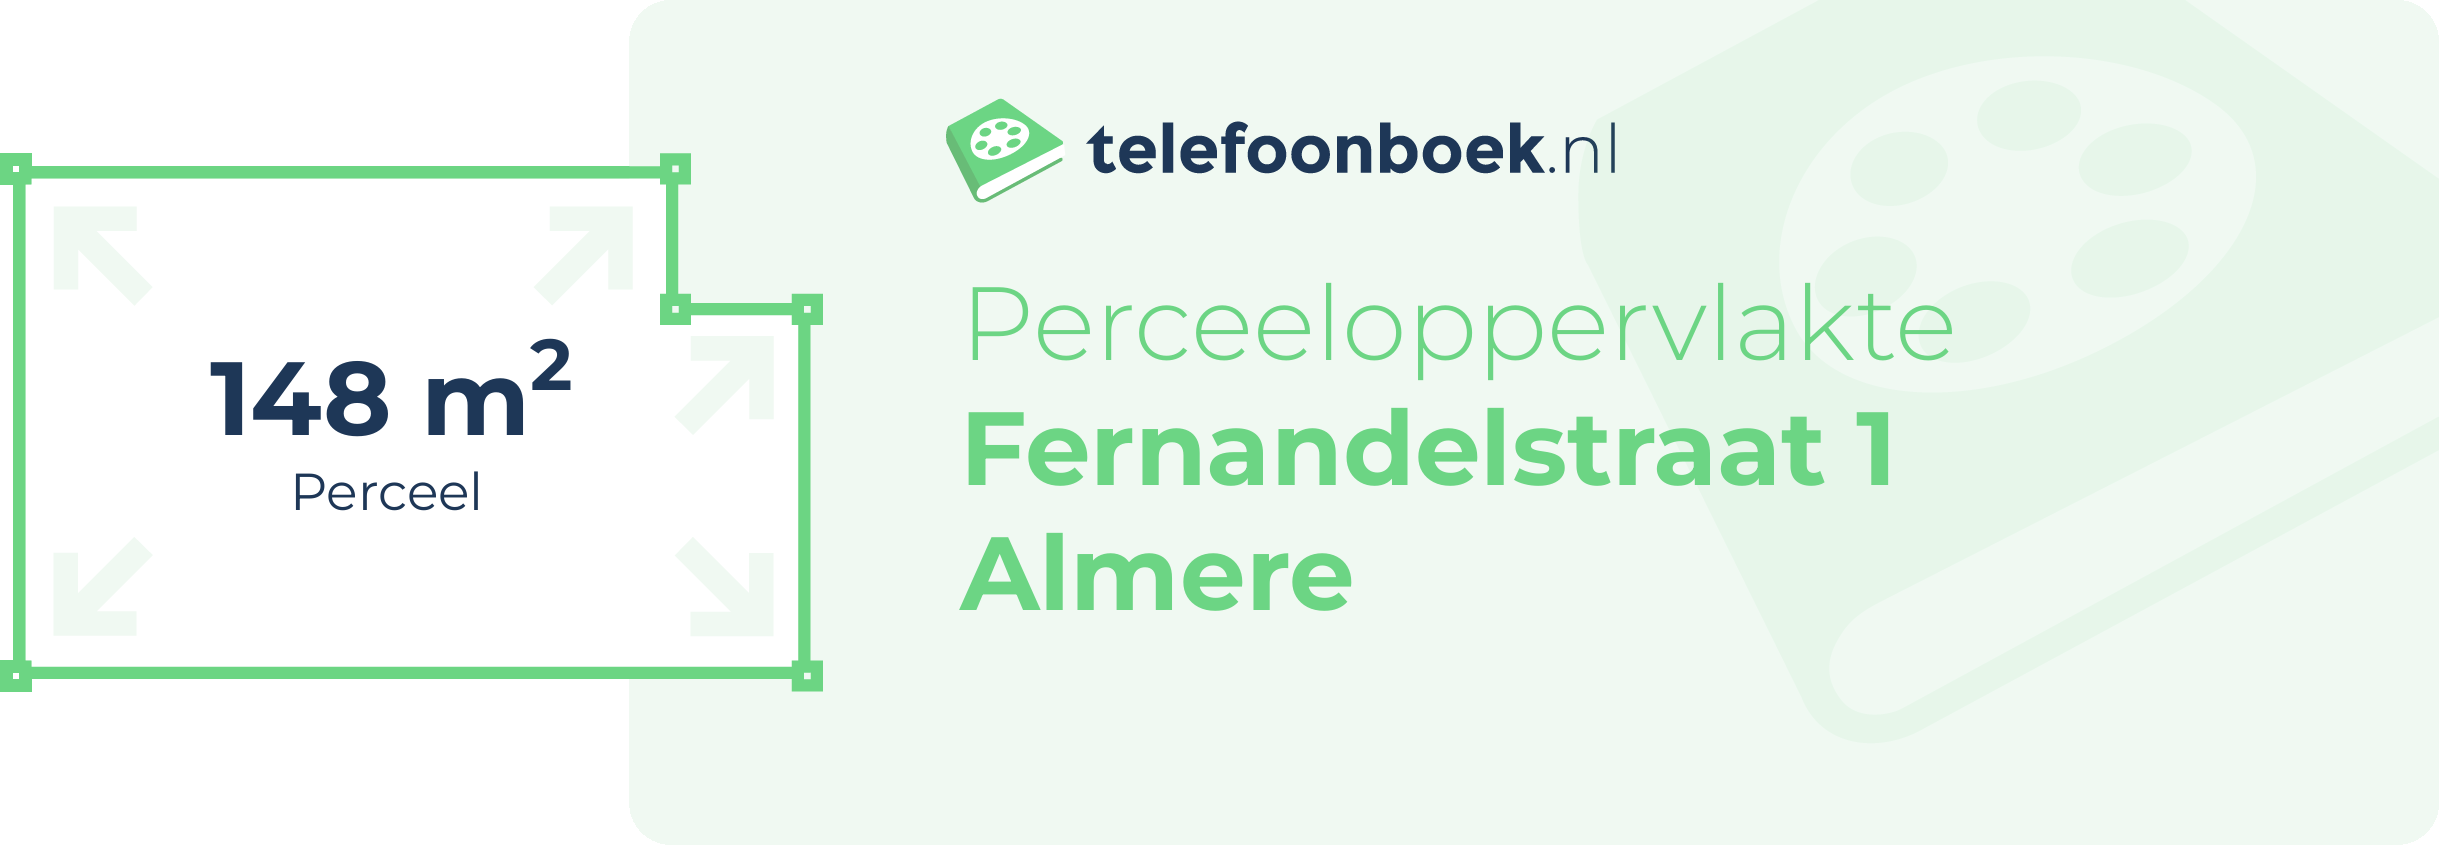 Perceeloppervlakte Fernandelstraat 1 Almere